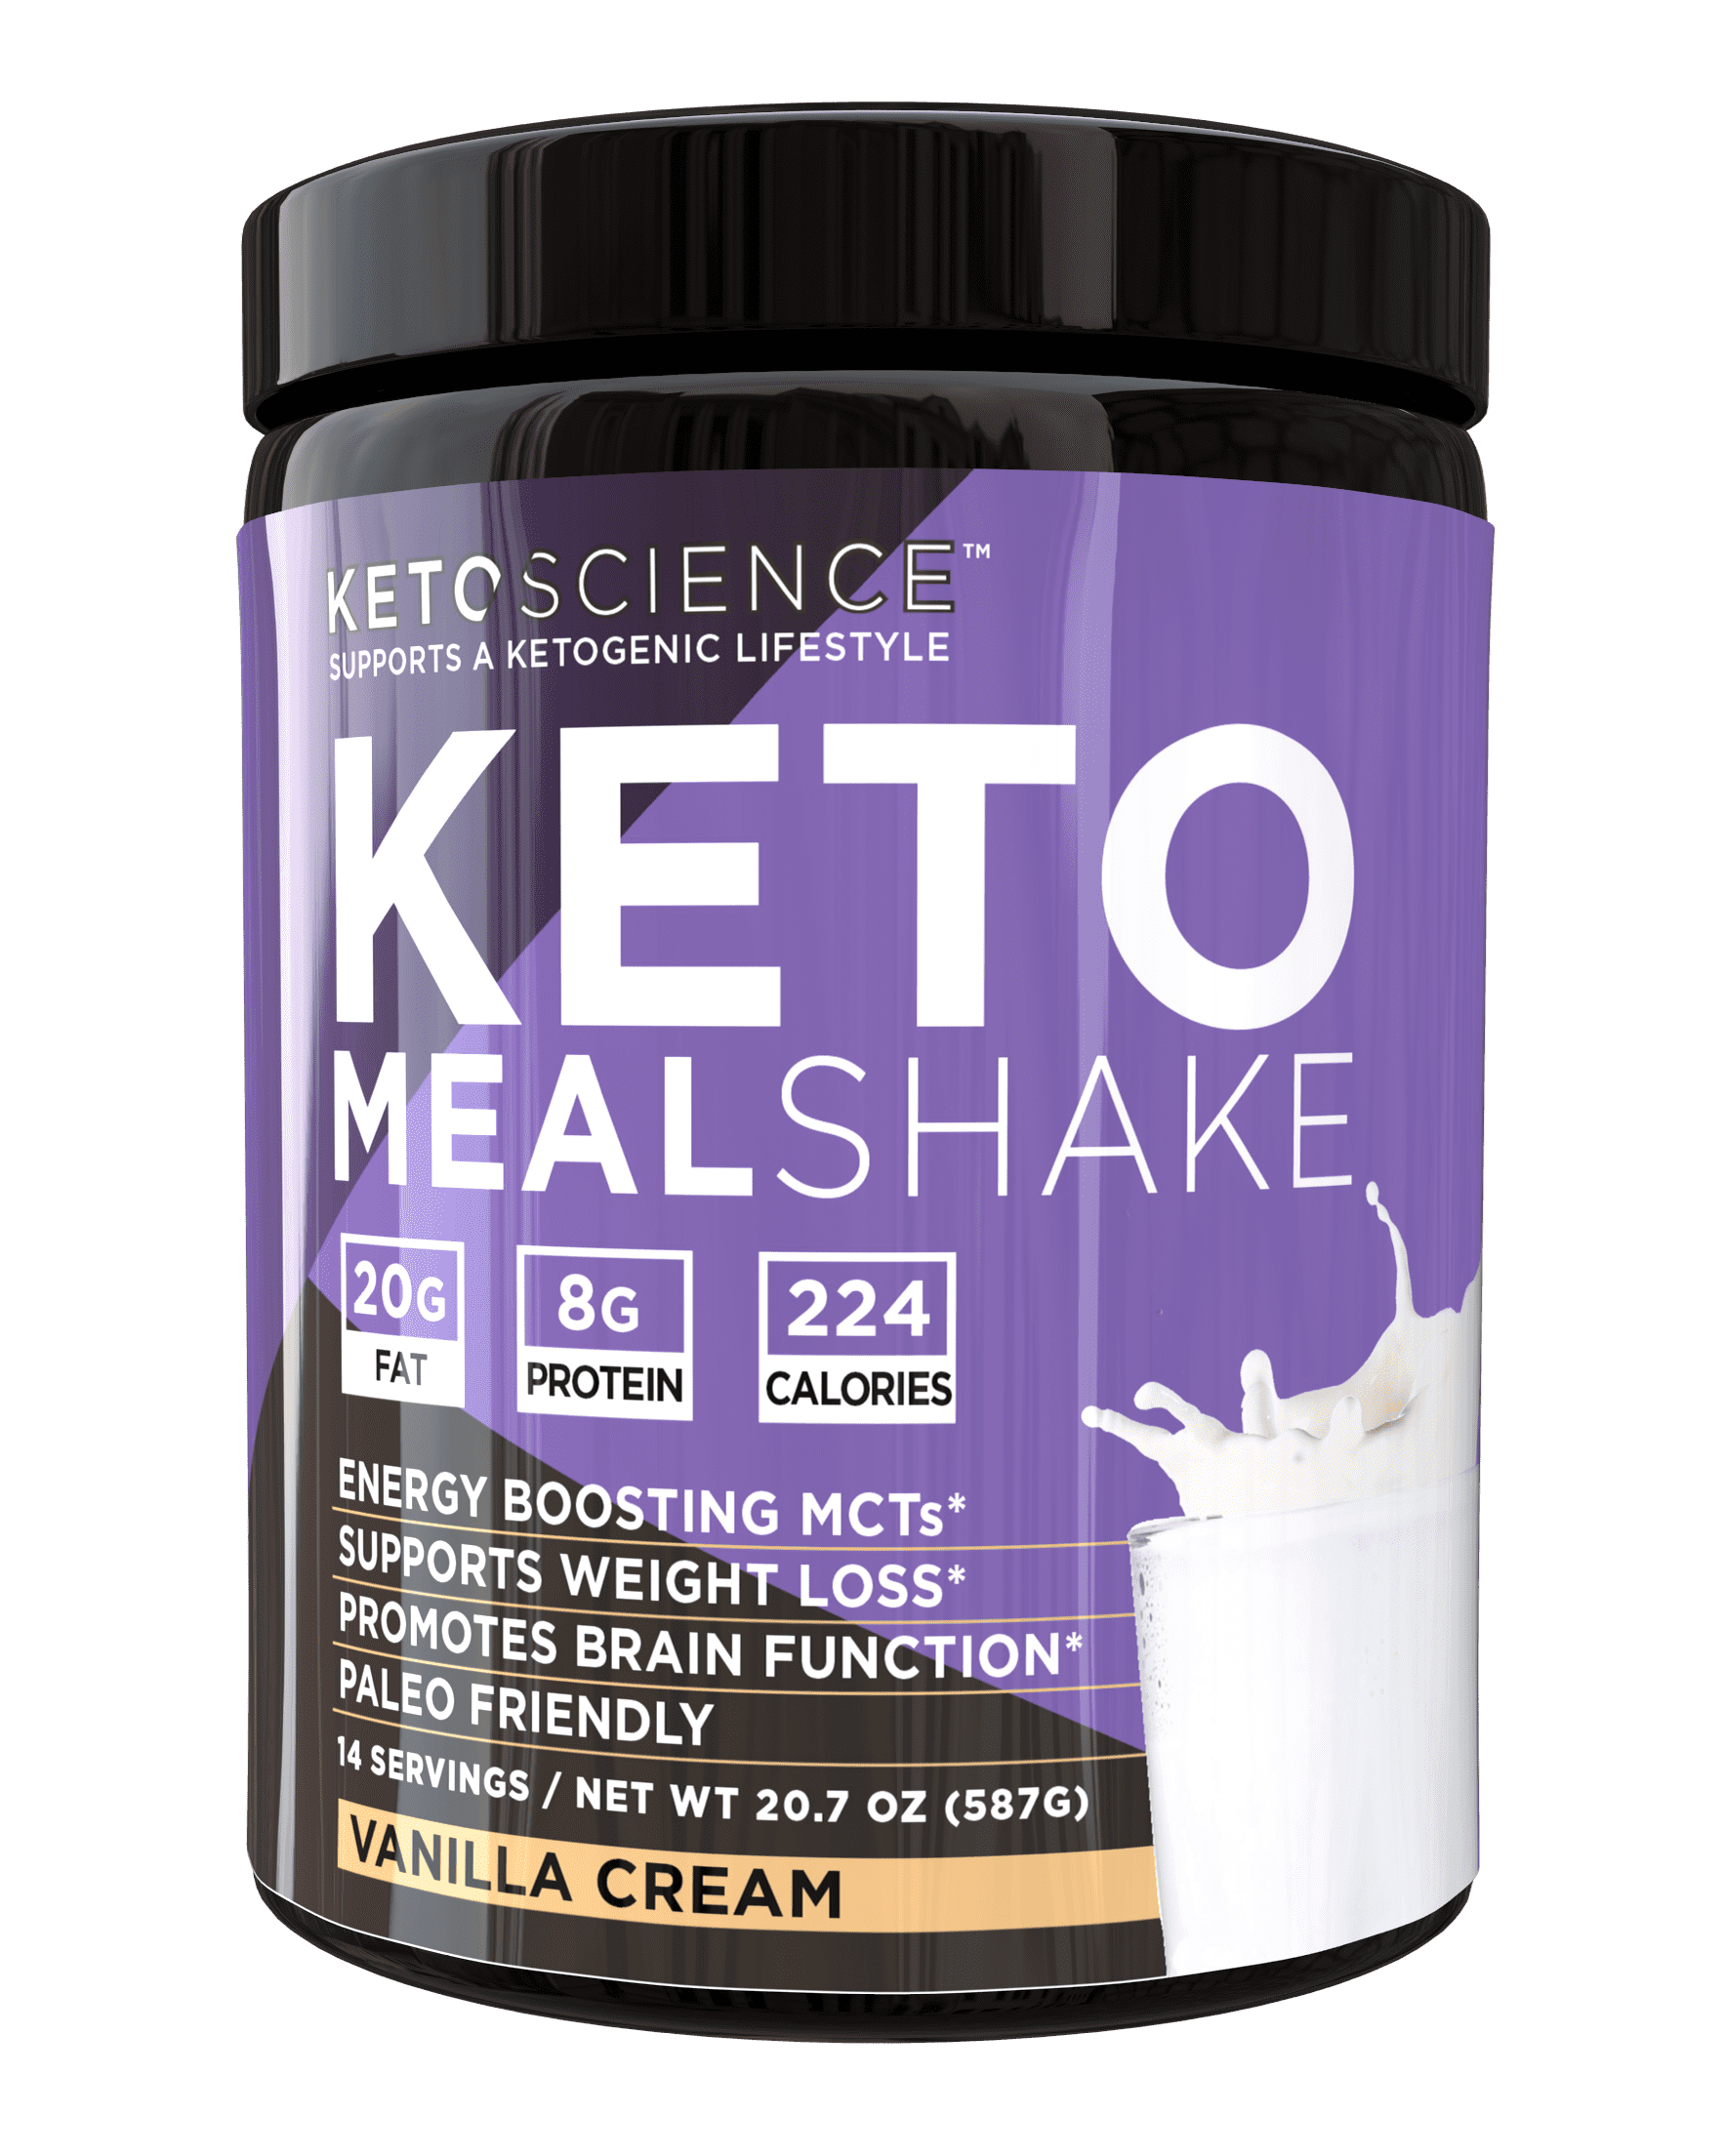 weight-loss-food-keto-diet-bmi-formula